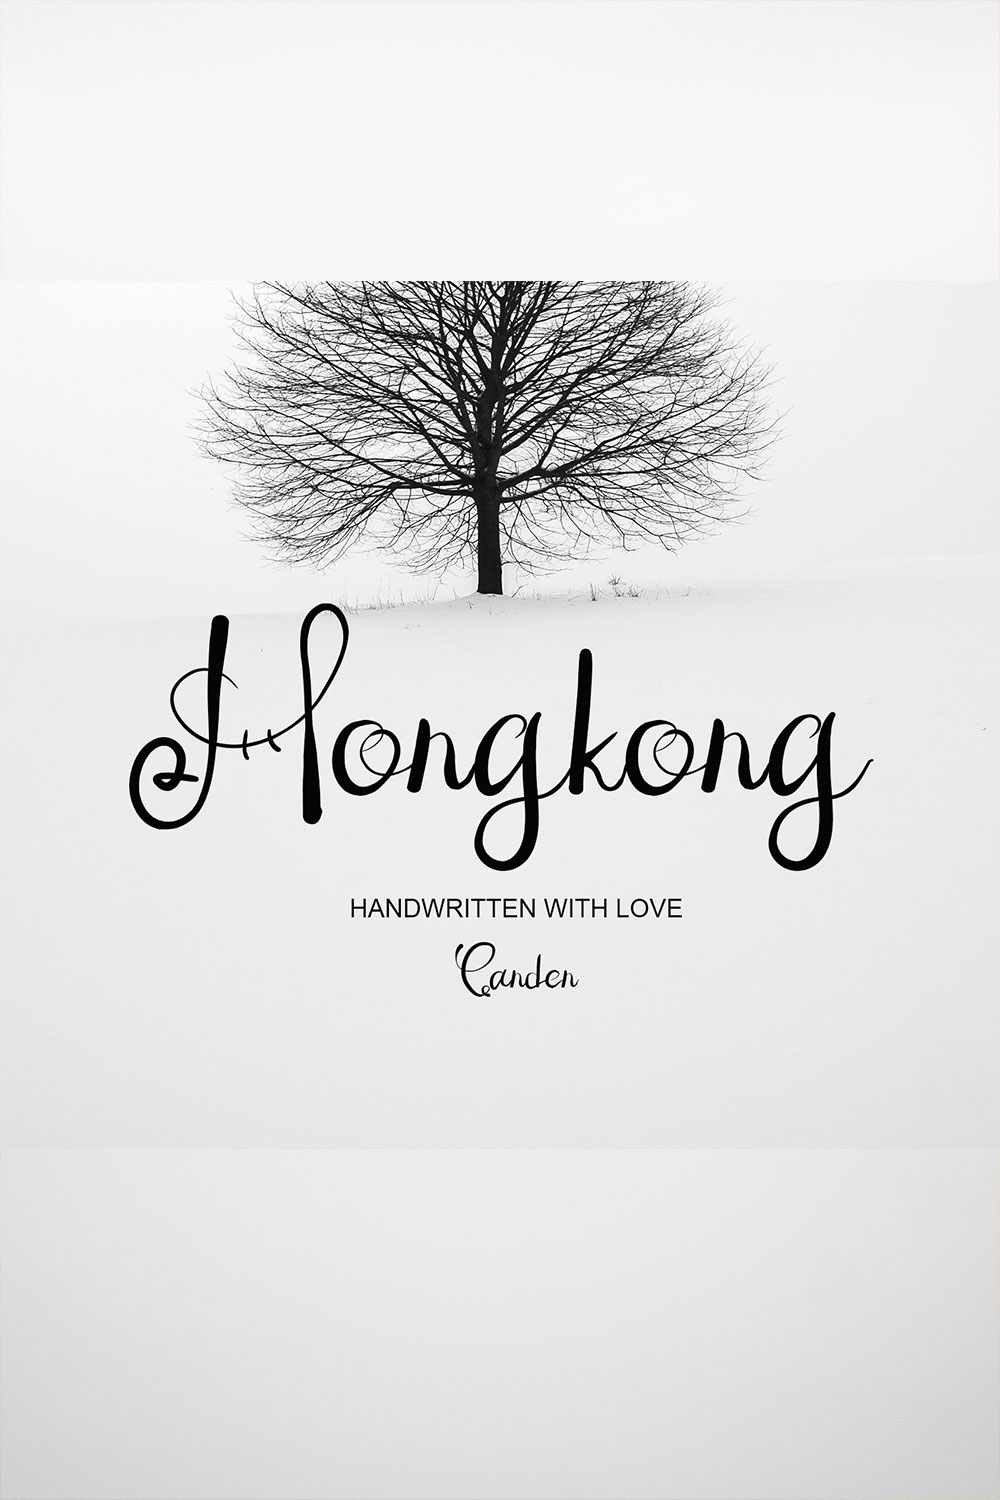 Hongkong Sans Serif Font Pinterest image.